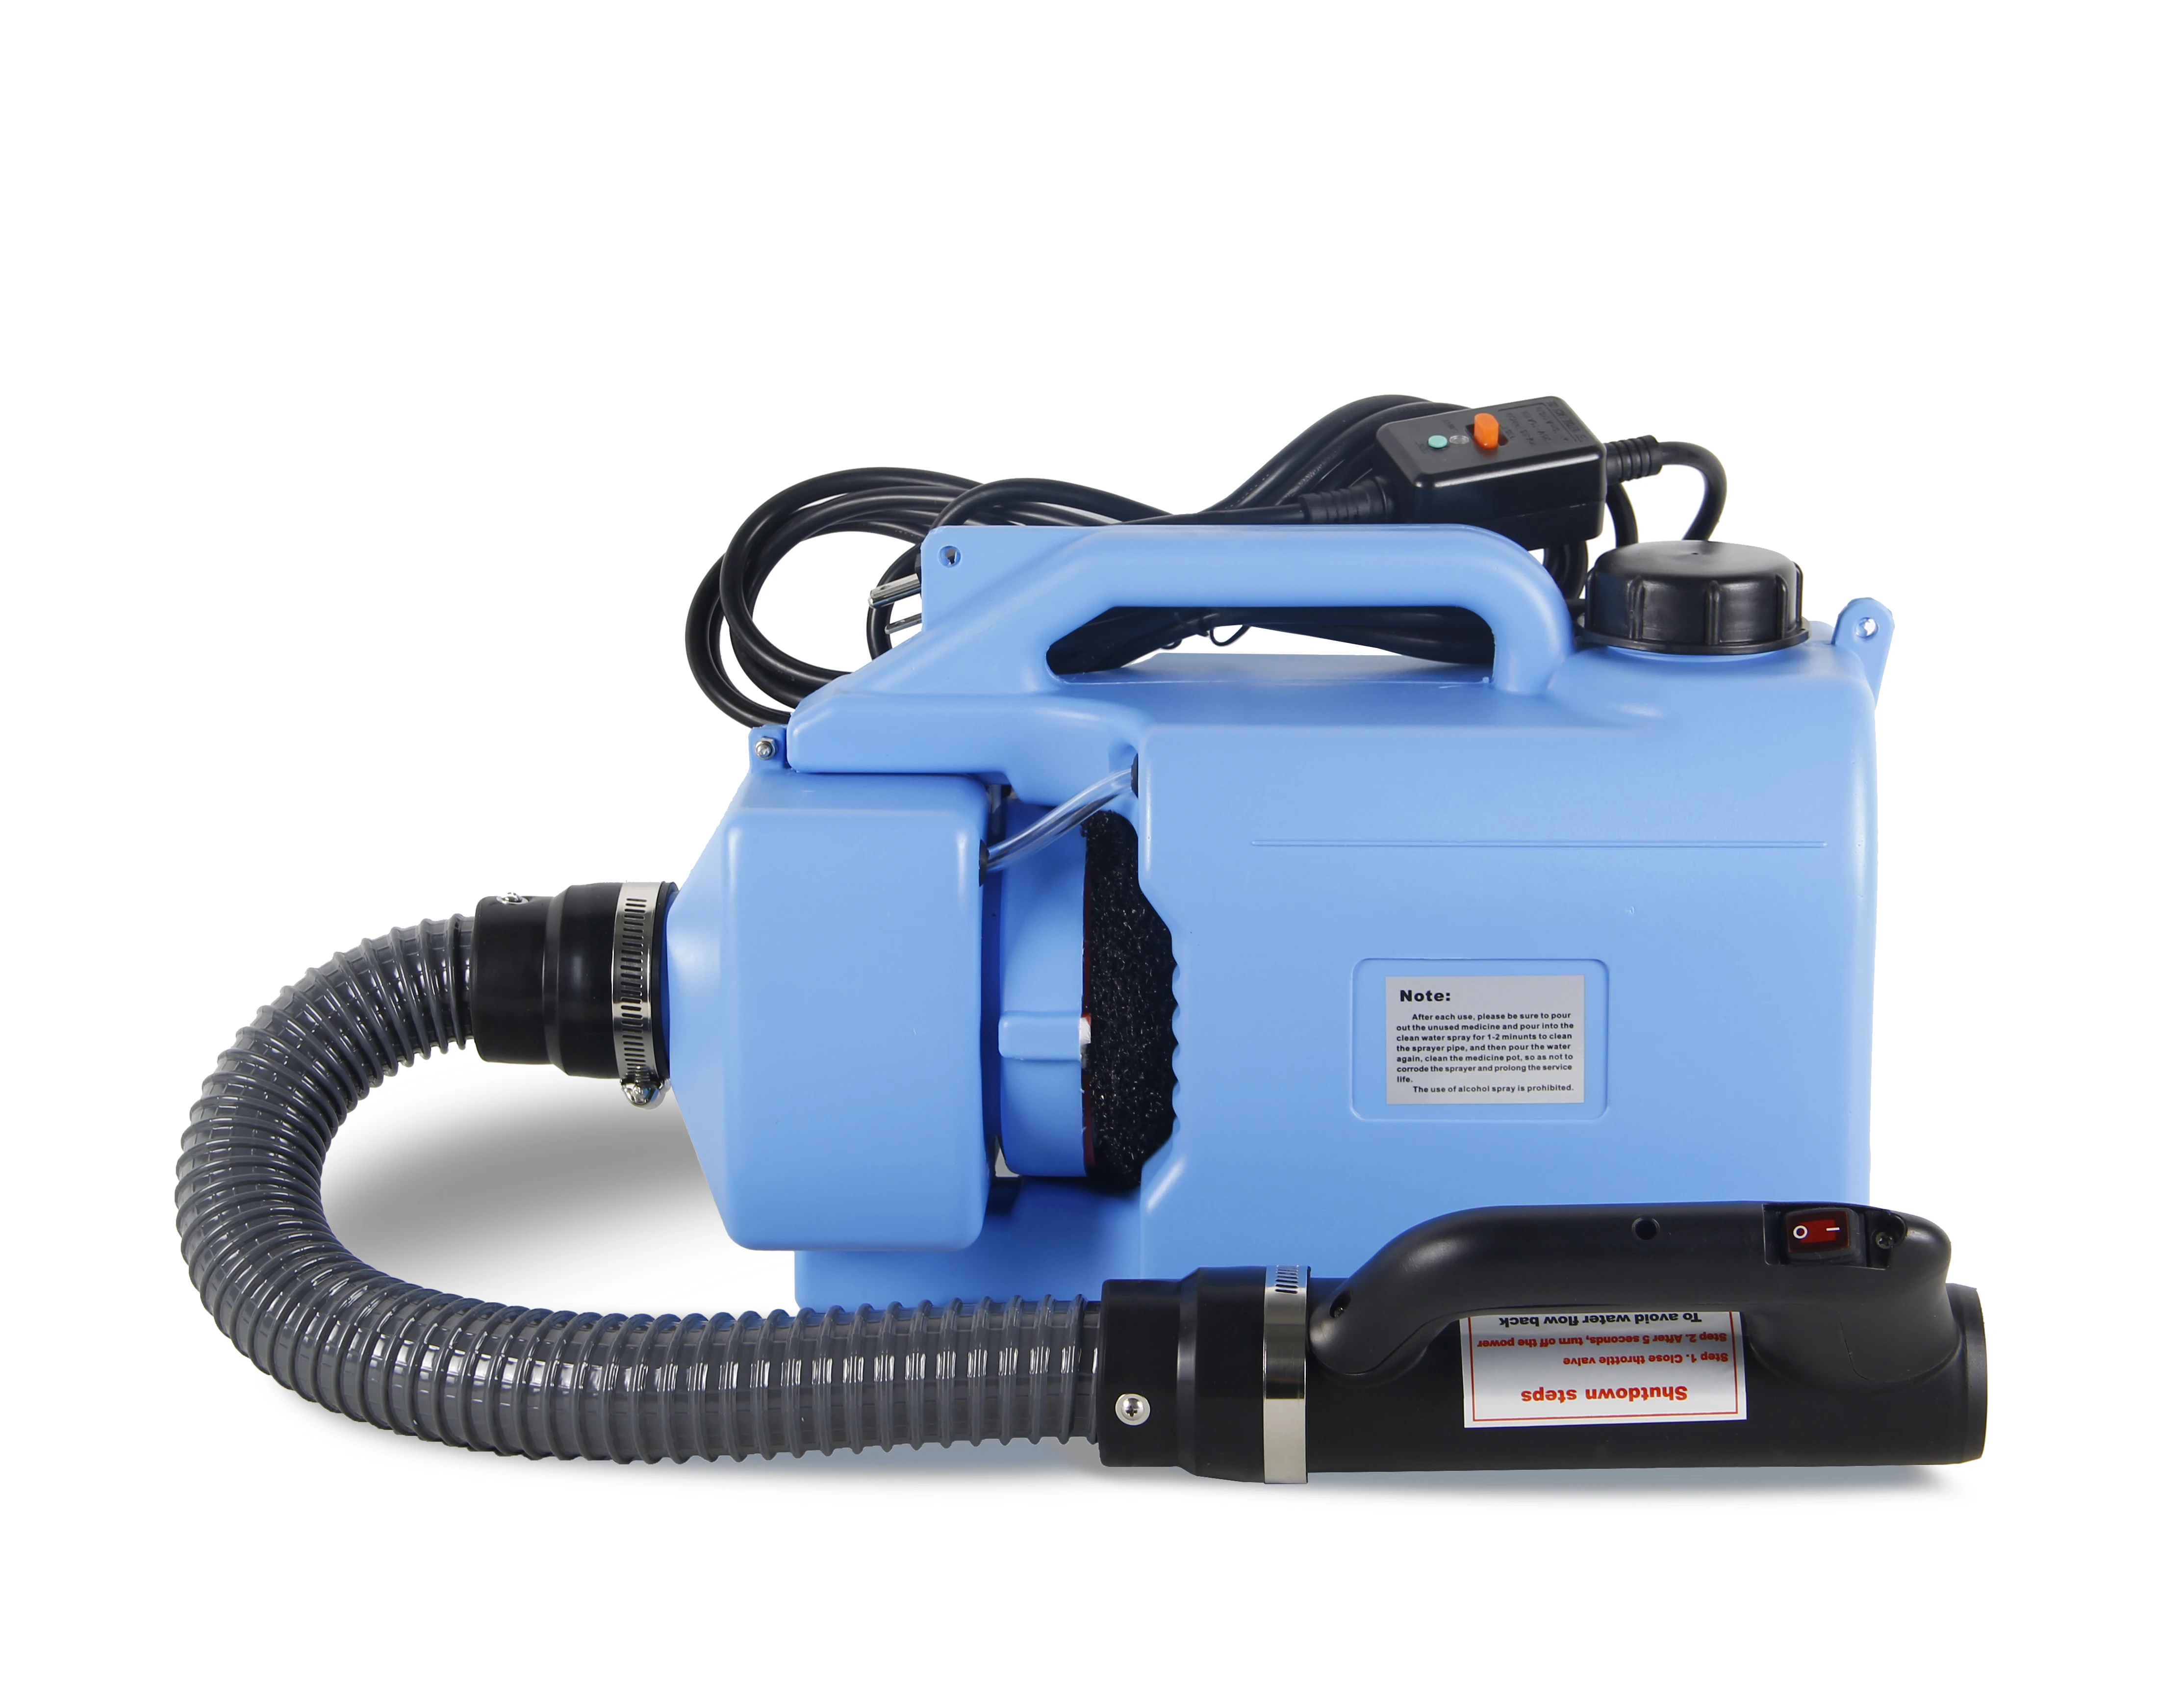 

5L capacity PE Plastic Type Garden Usage ulv cold fogging fogger electric disinfection spray fog sprayer machine, Blue